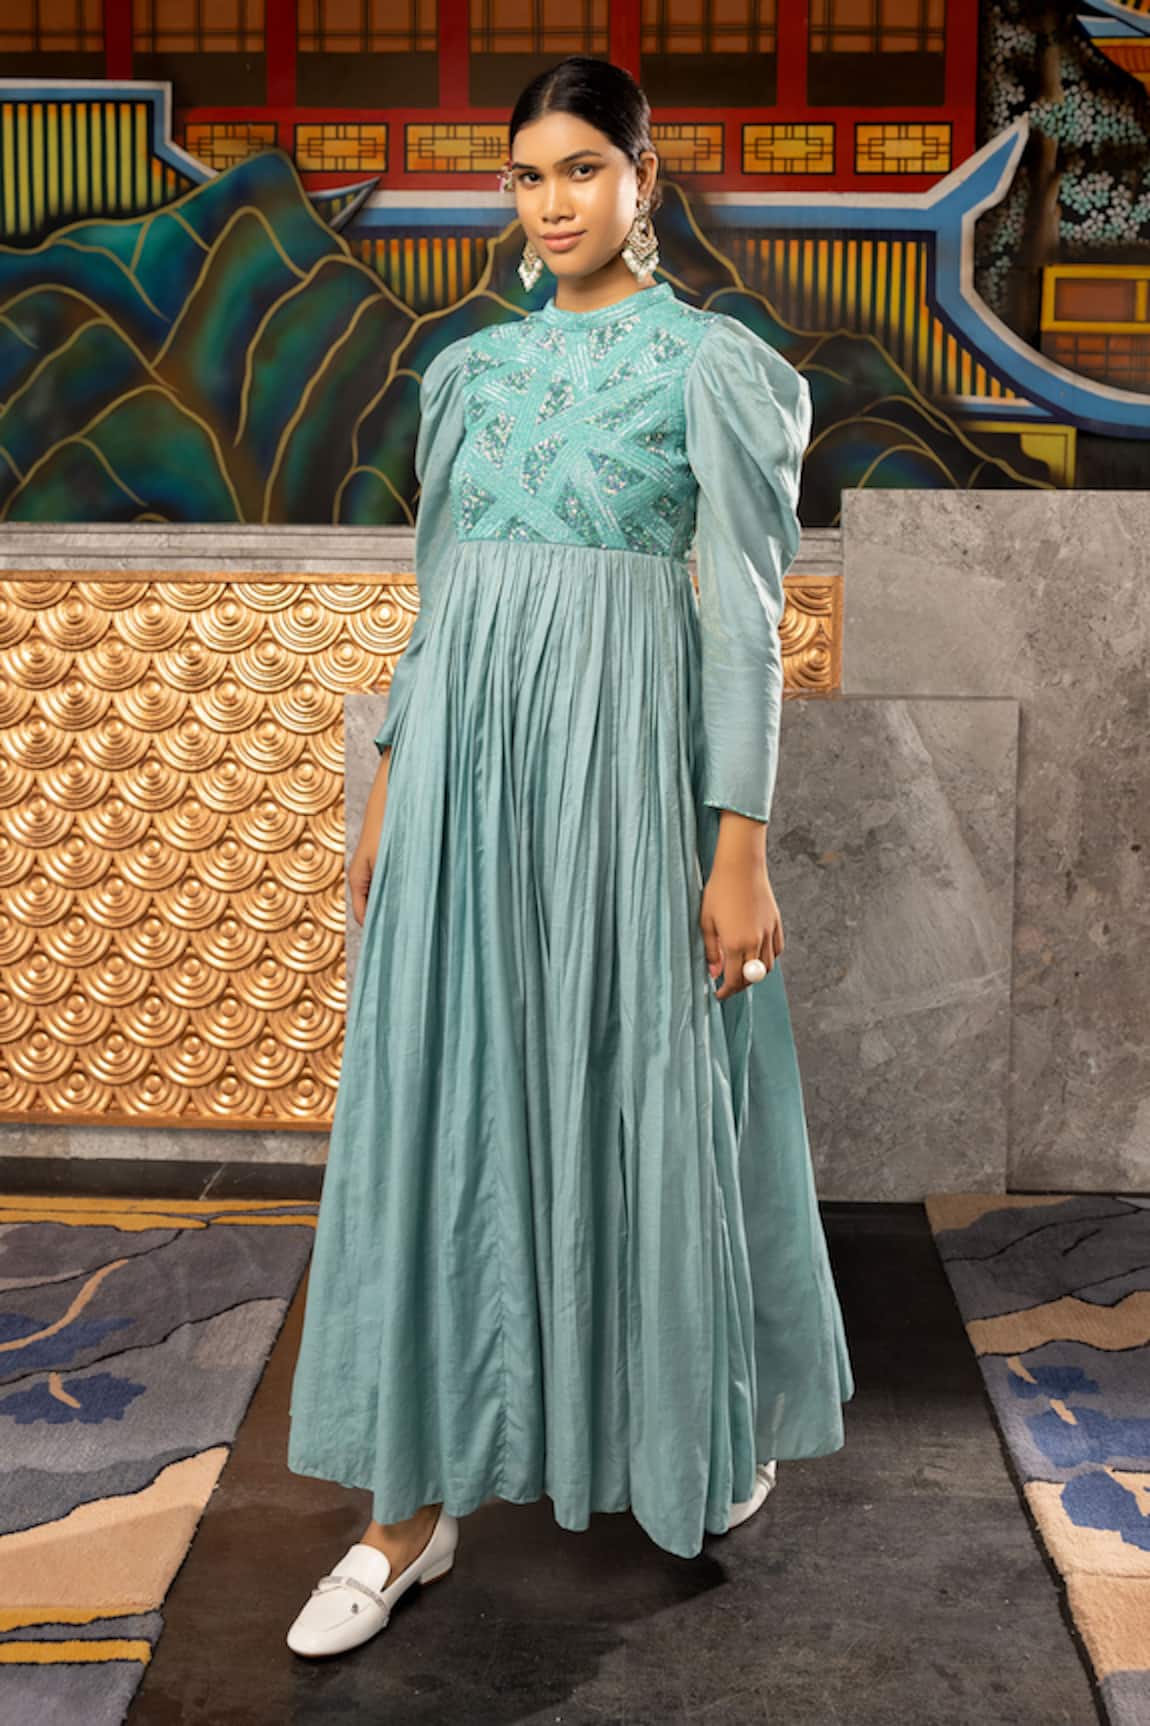 ABSTRACT BY MEGHA JAIN MADAAN Embellished Yoke Long Dress